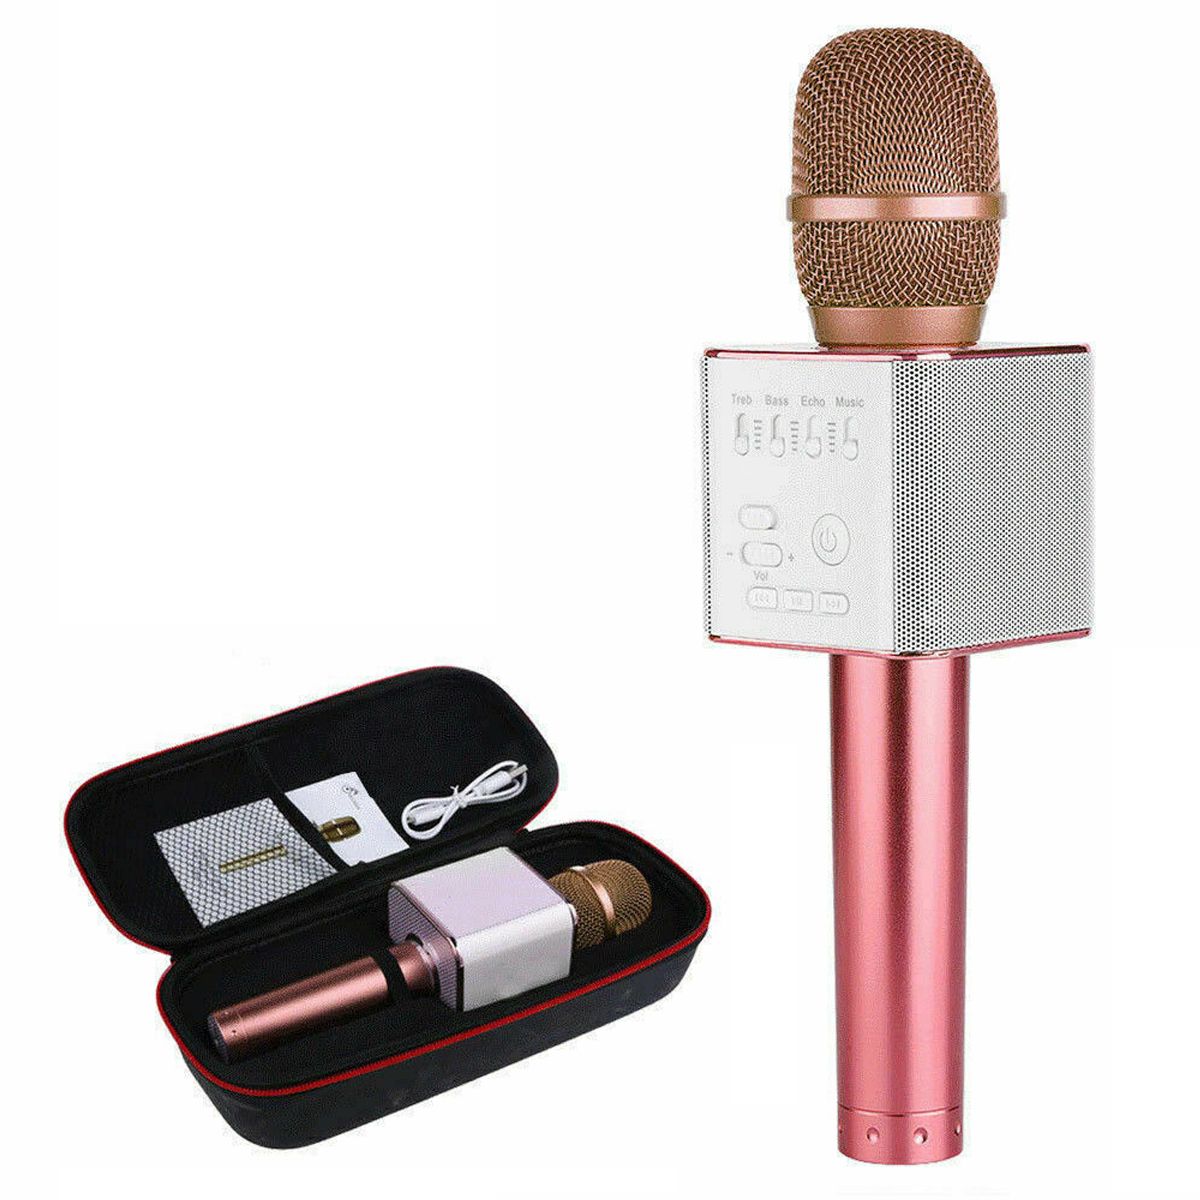 Q9-30Hz-20KHz-bluetooth-Wireless-Audio-Microphone-Karaoke-Player-Speaker-for-Mobile-Phone-USB-Chargi-1730374